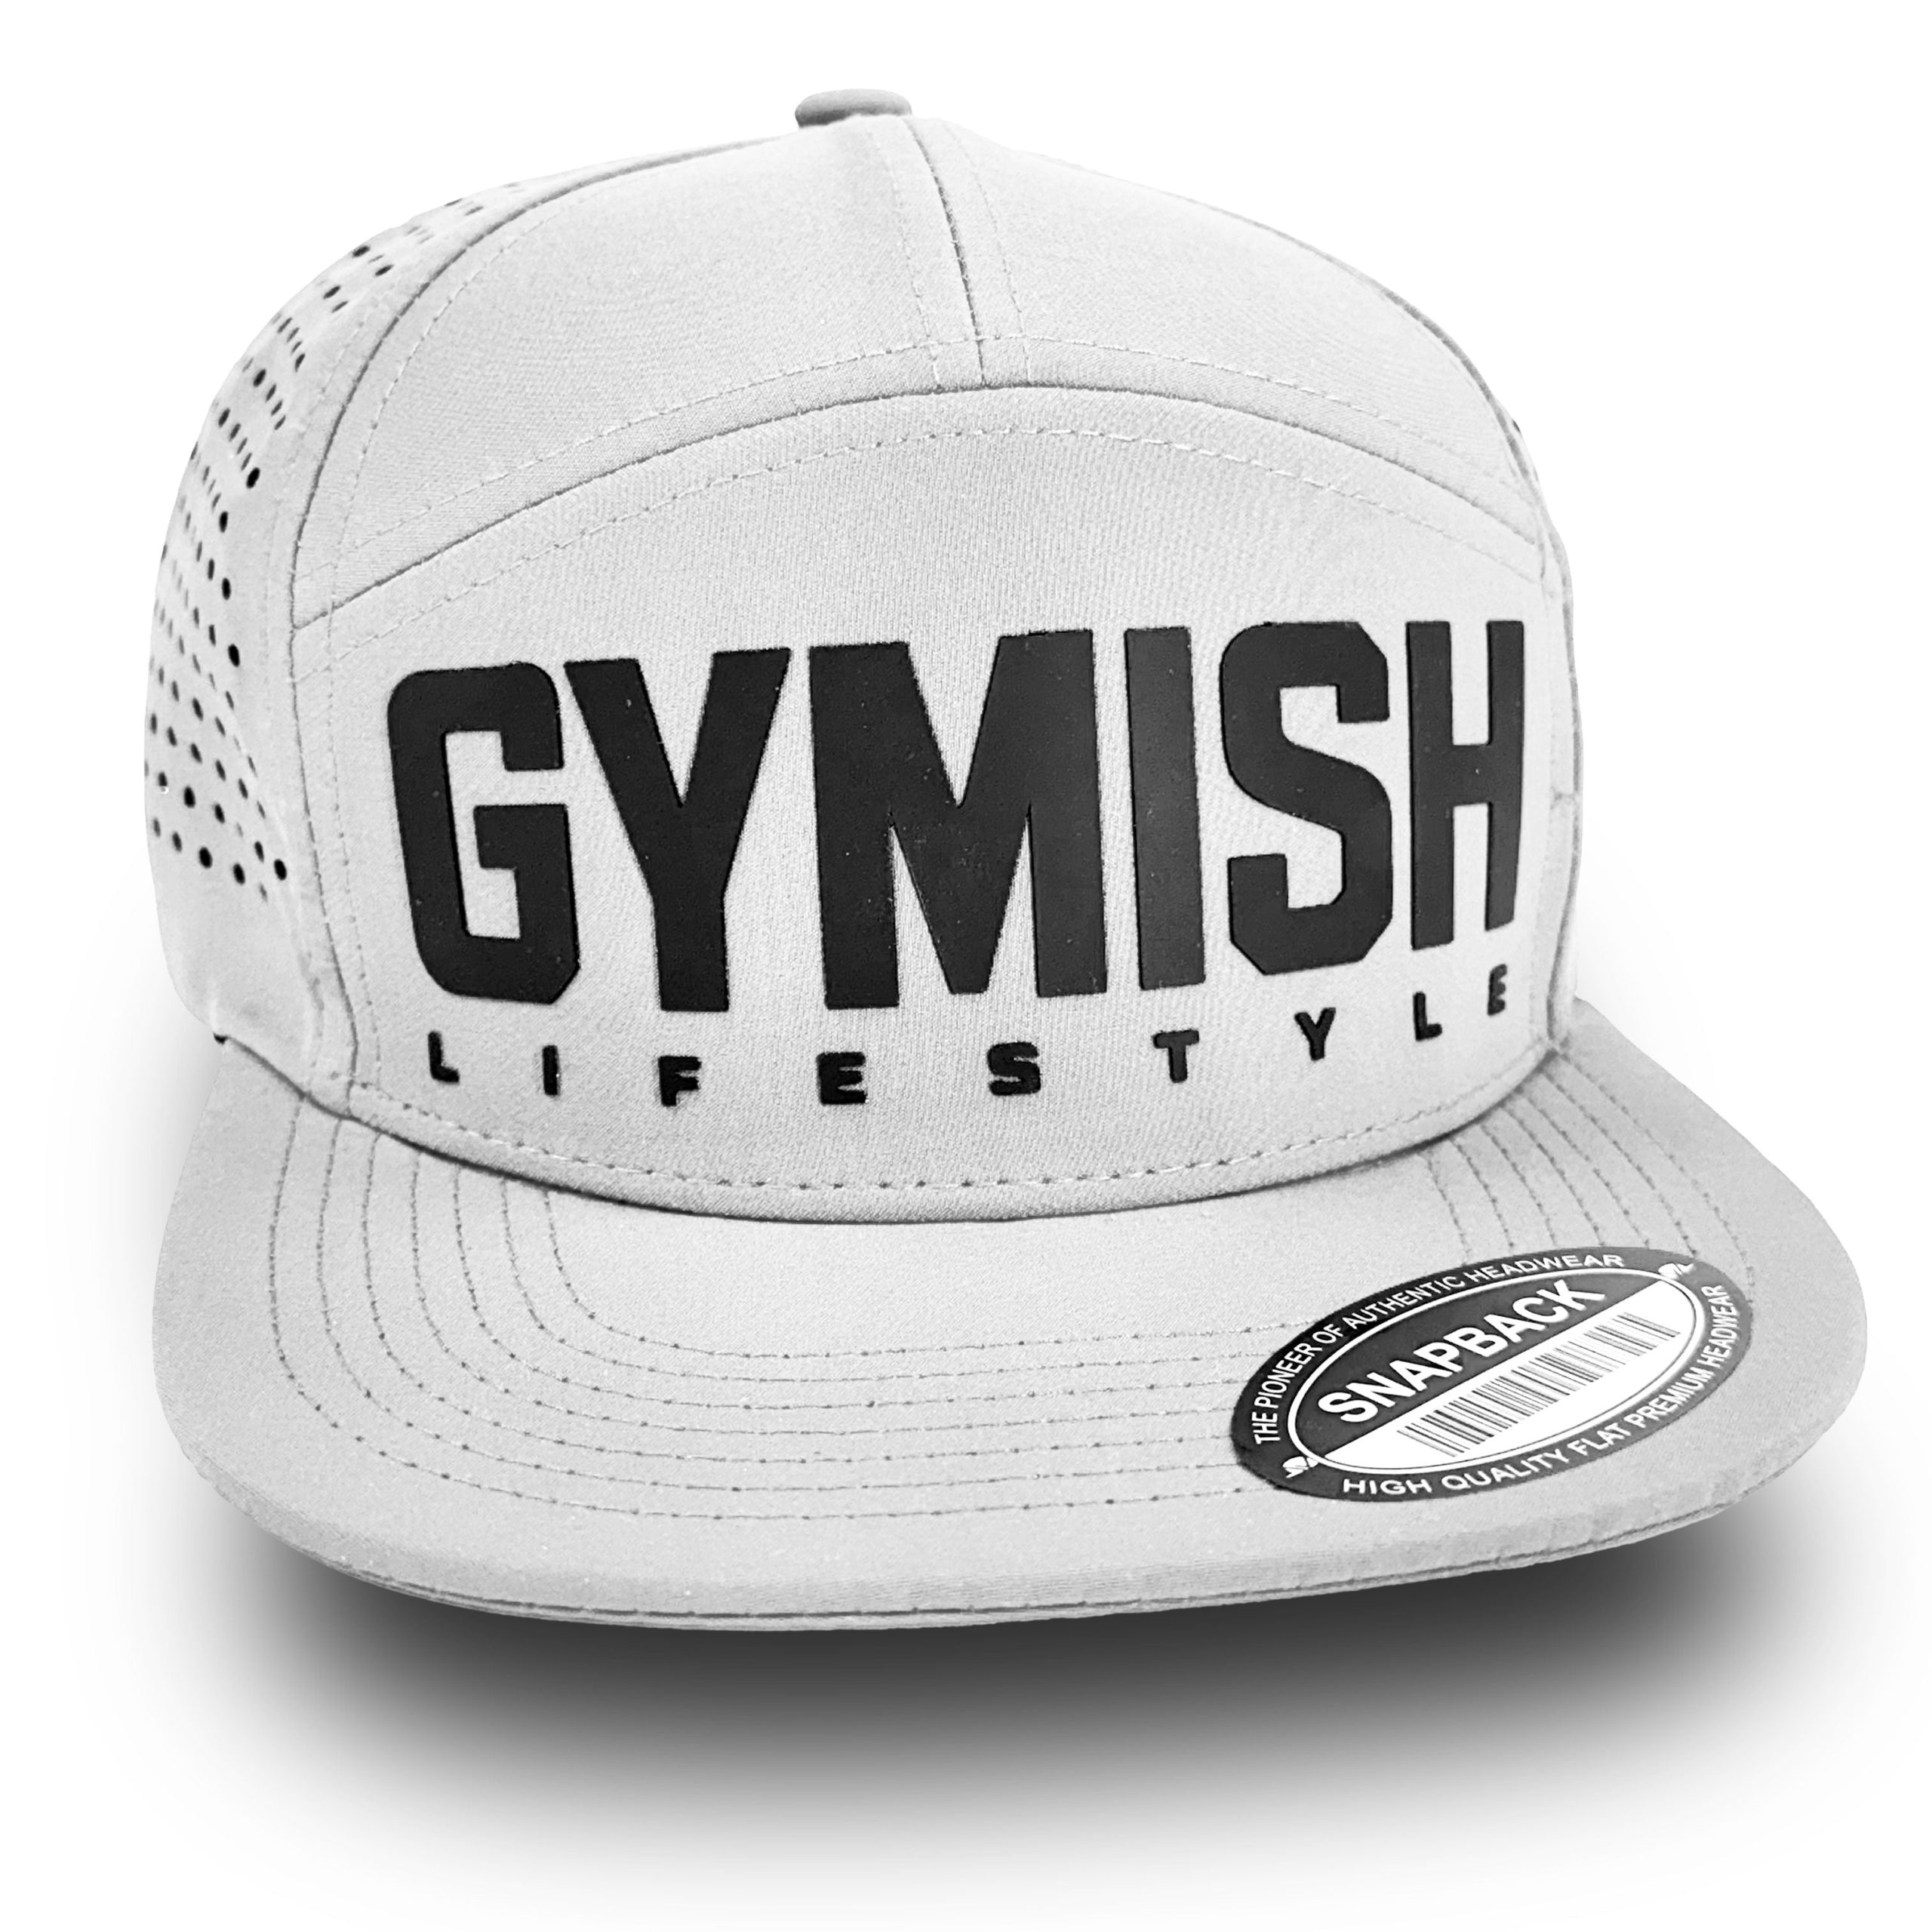 Gym hats